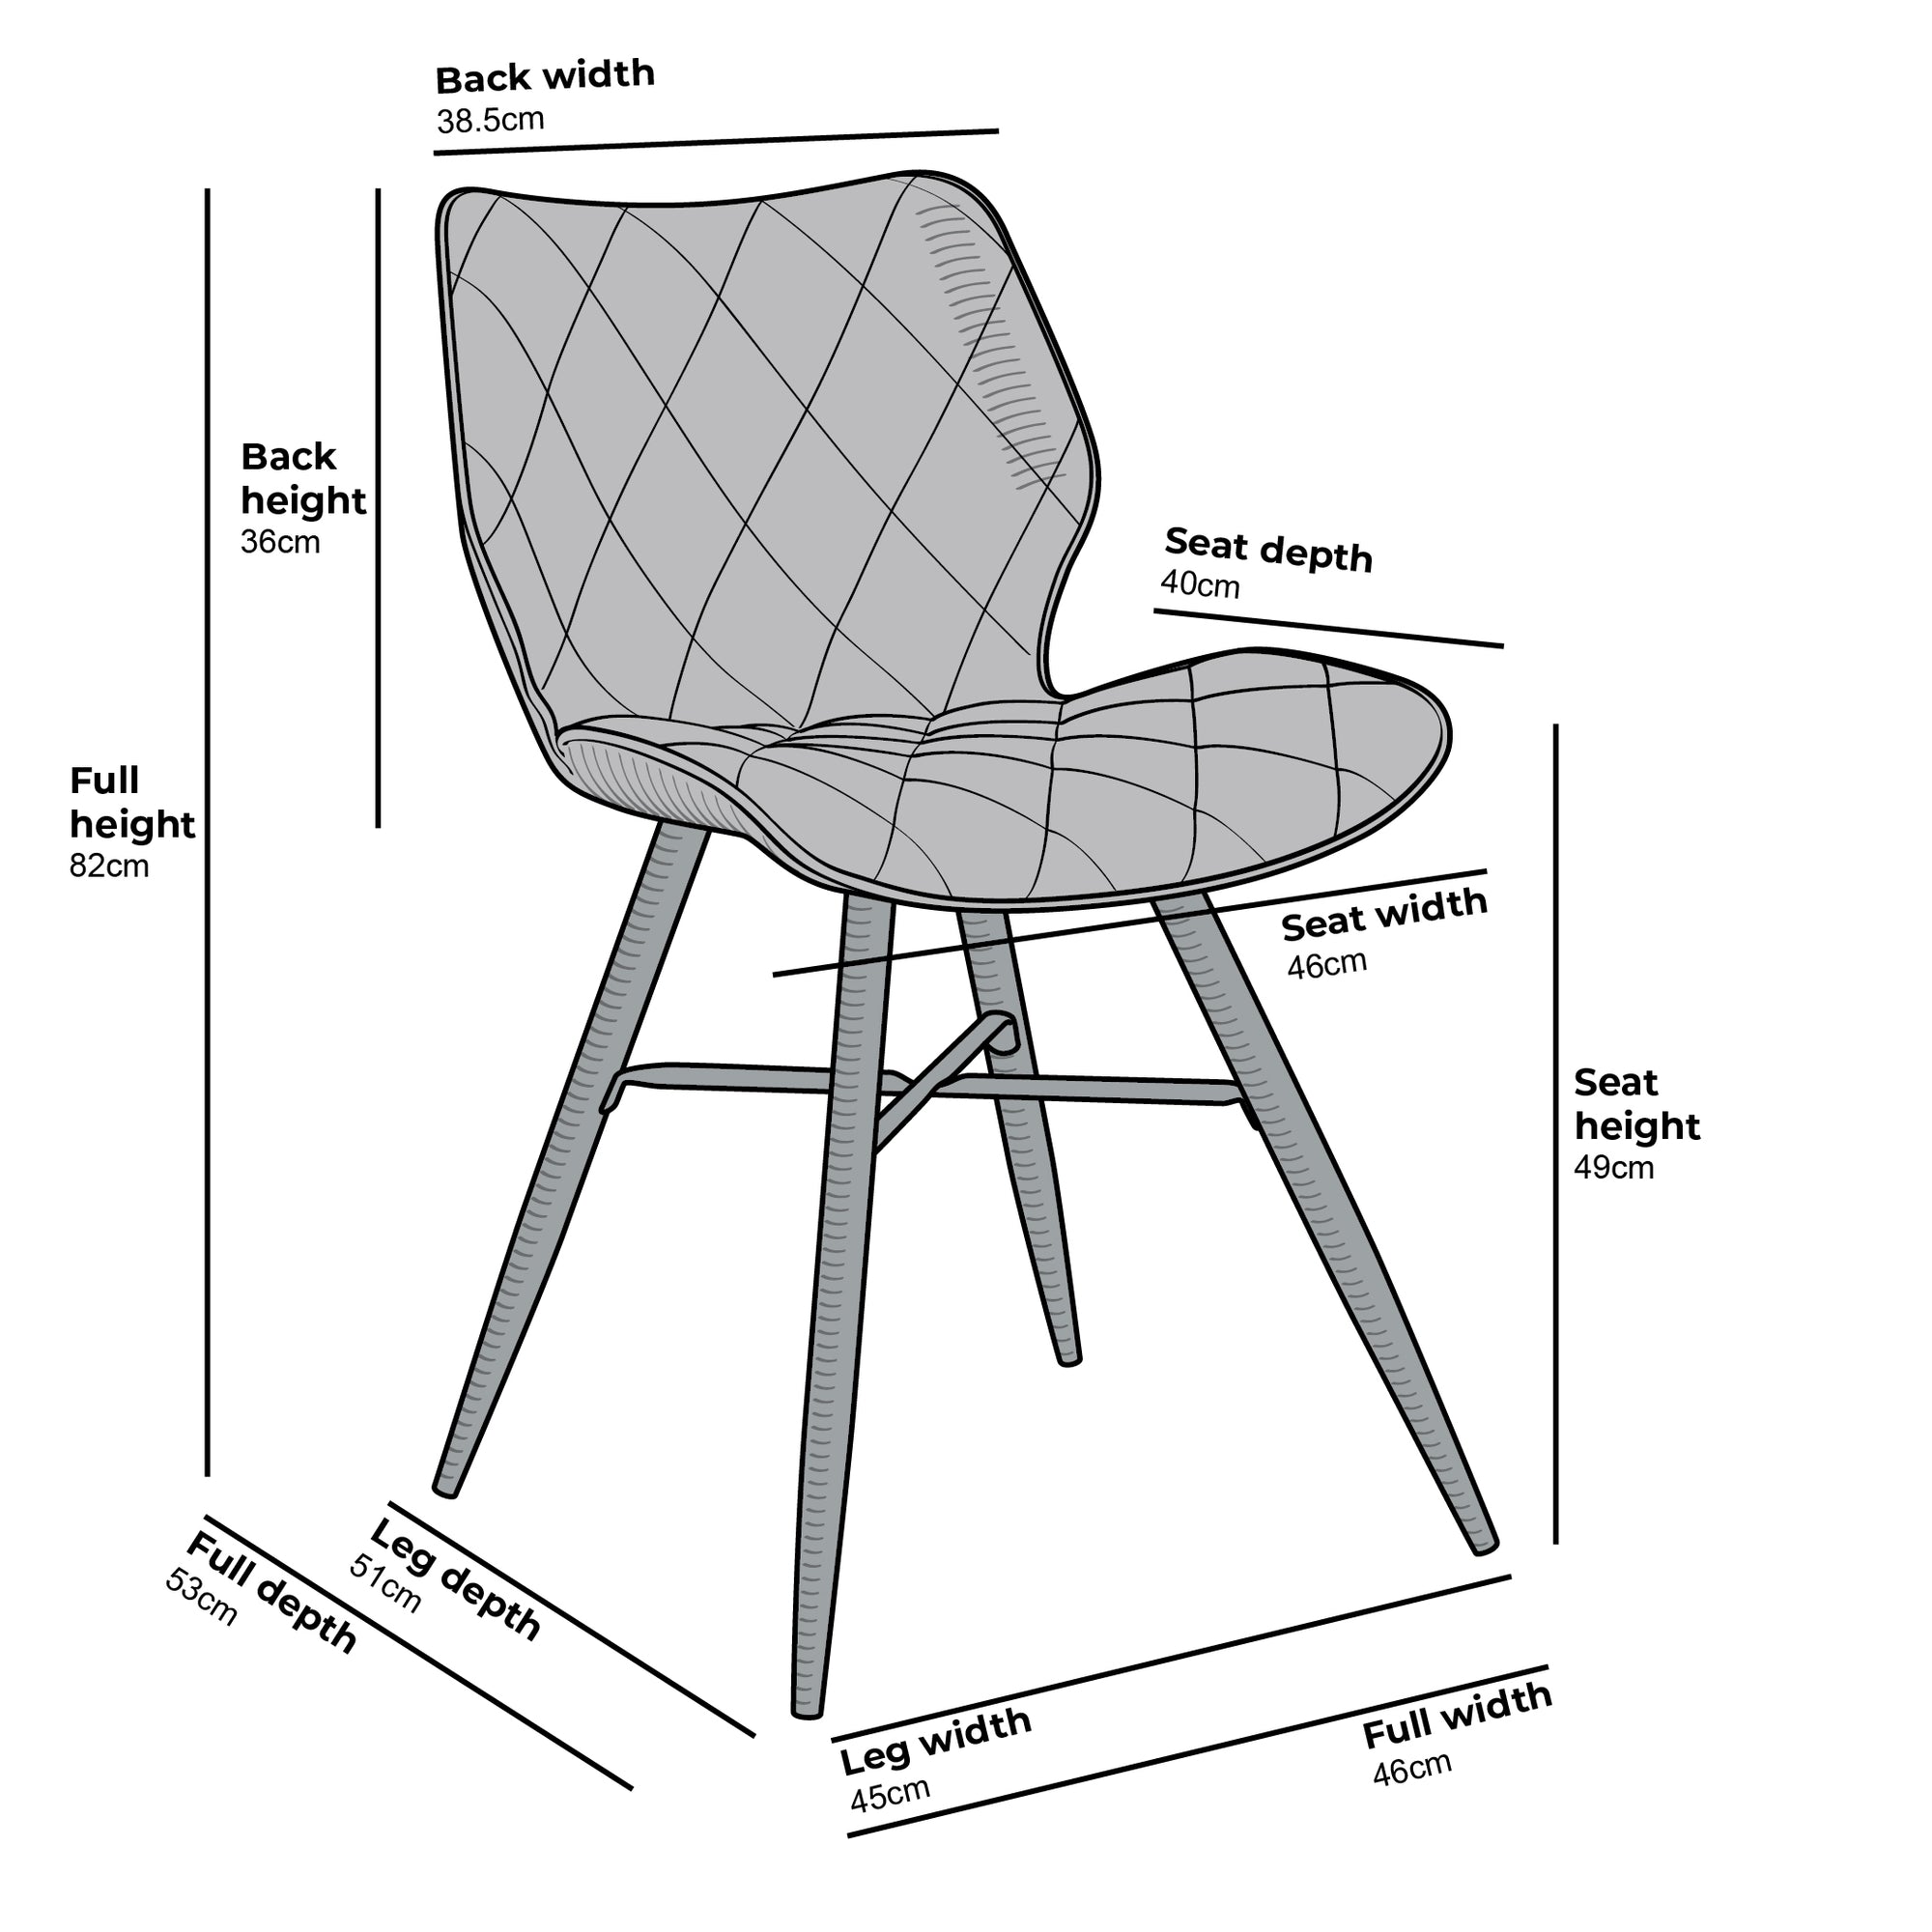 Set of 2 Ampney Velvet Diamond Stitch Dining Chairs with Metal Legs (Dark Grey Velvet)